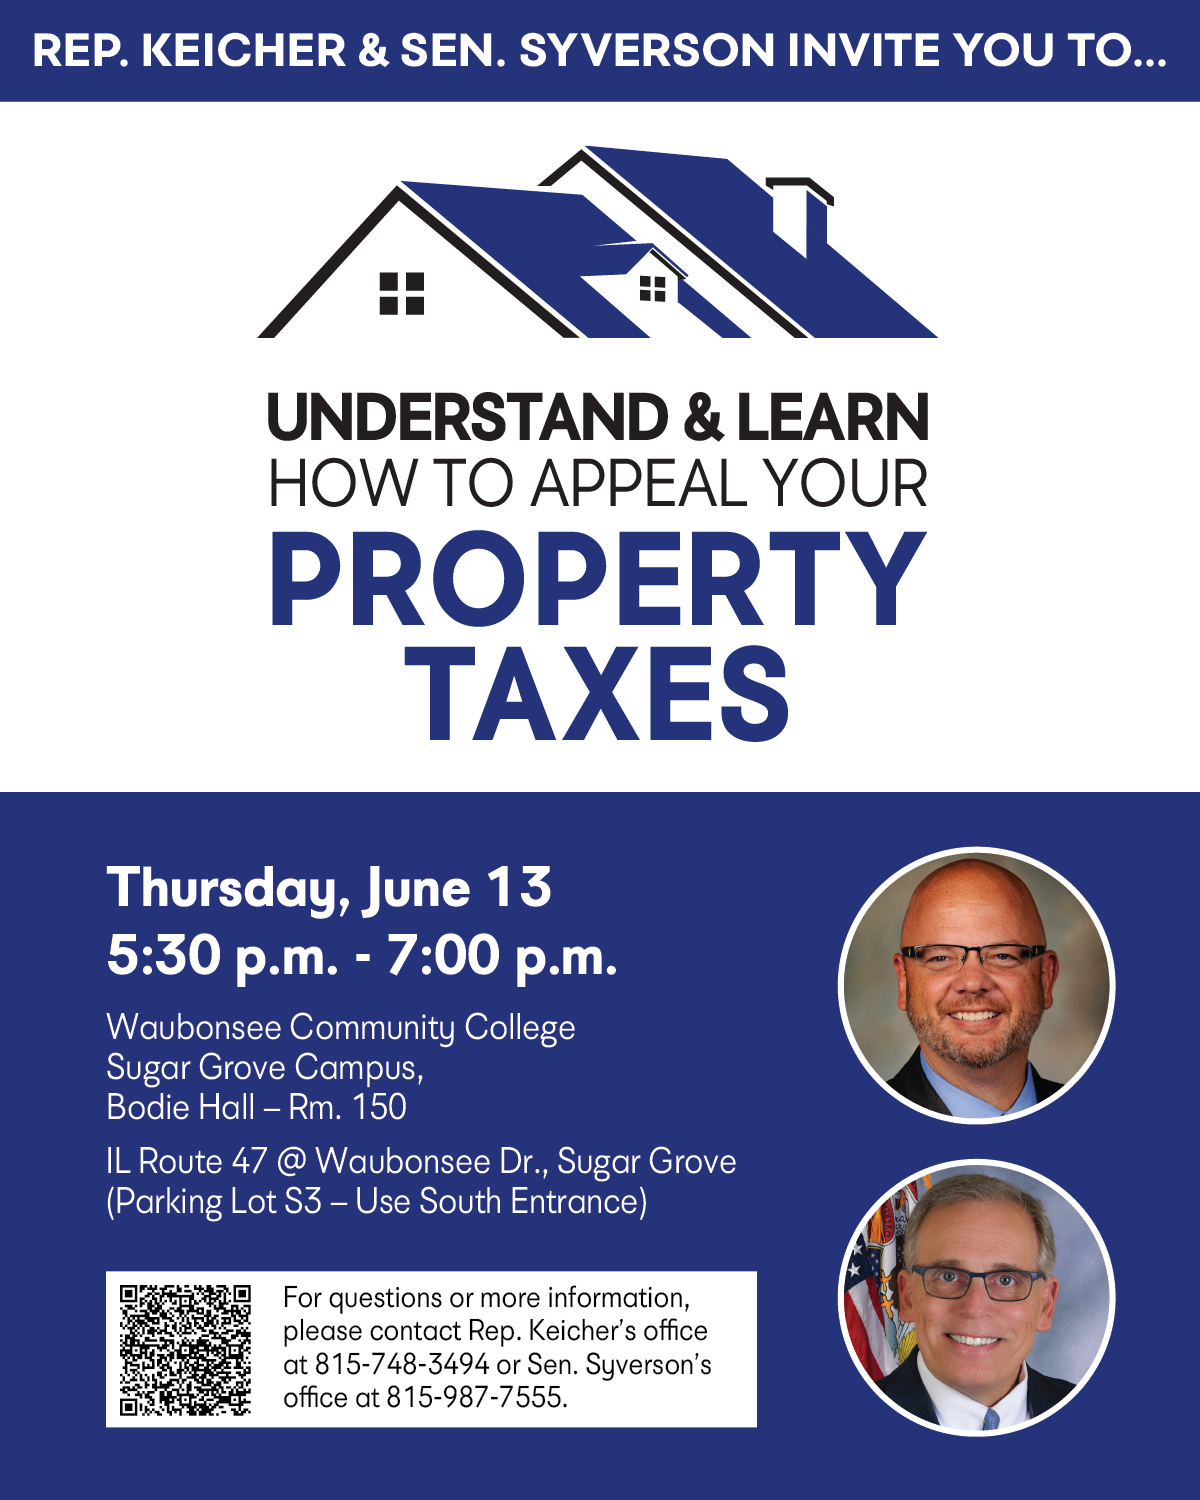 Property Tax Seminar June 13 at Waubonsee Community College, Sugar Grove Campus, Brodie Hall, Room 150!